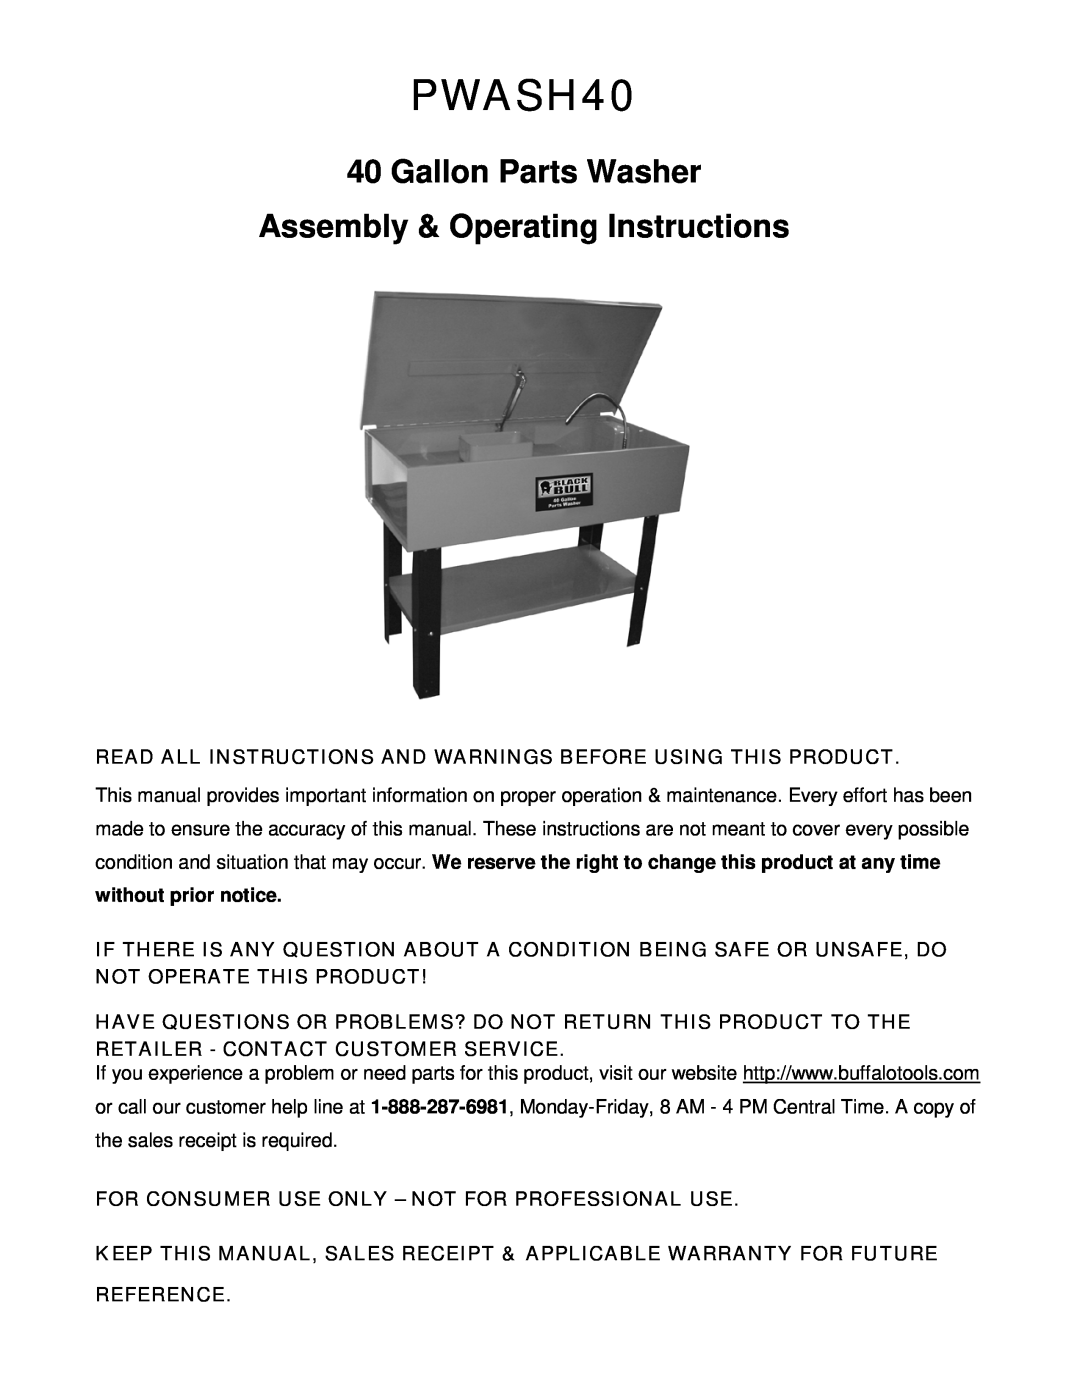 Buffalo Technology PWASH40201407 warranty Gallon Parts Washer, Assembly & Operating Instructions 